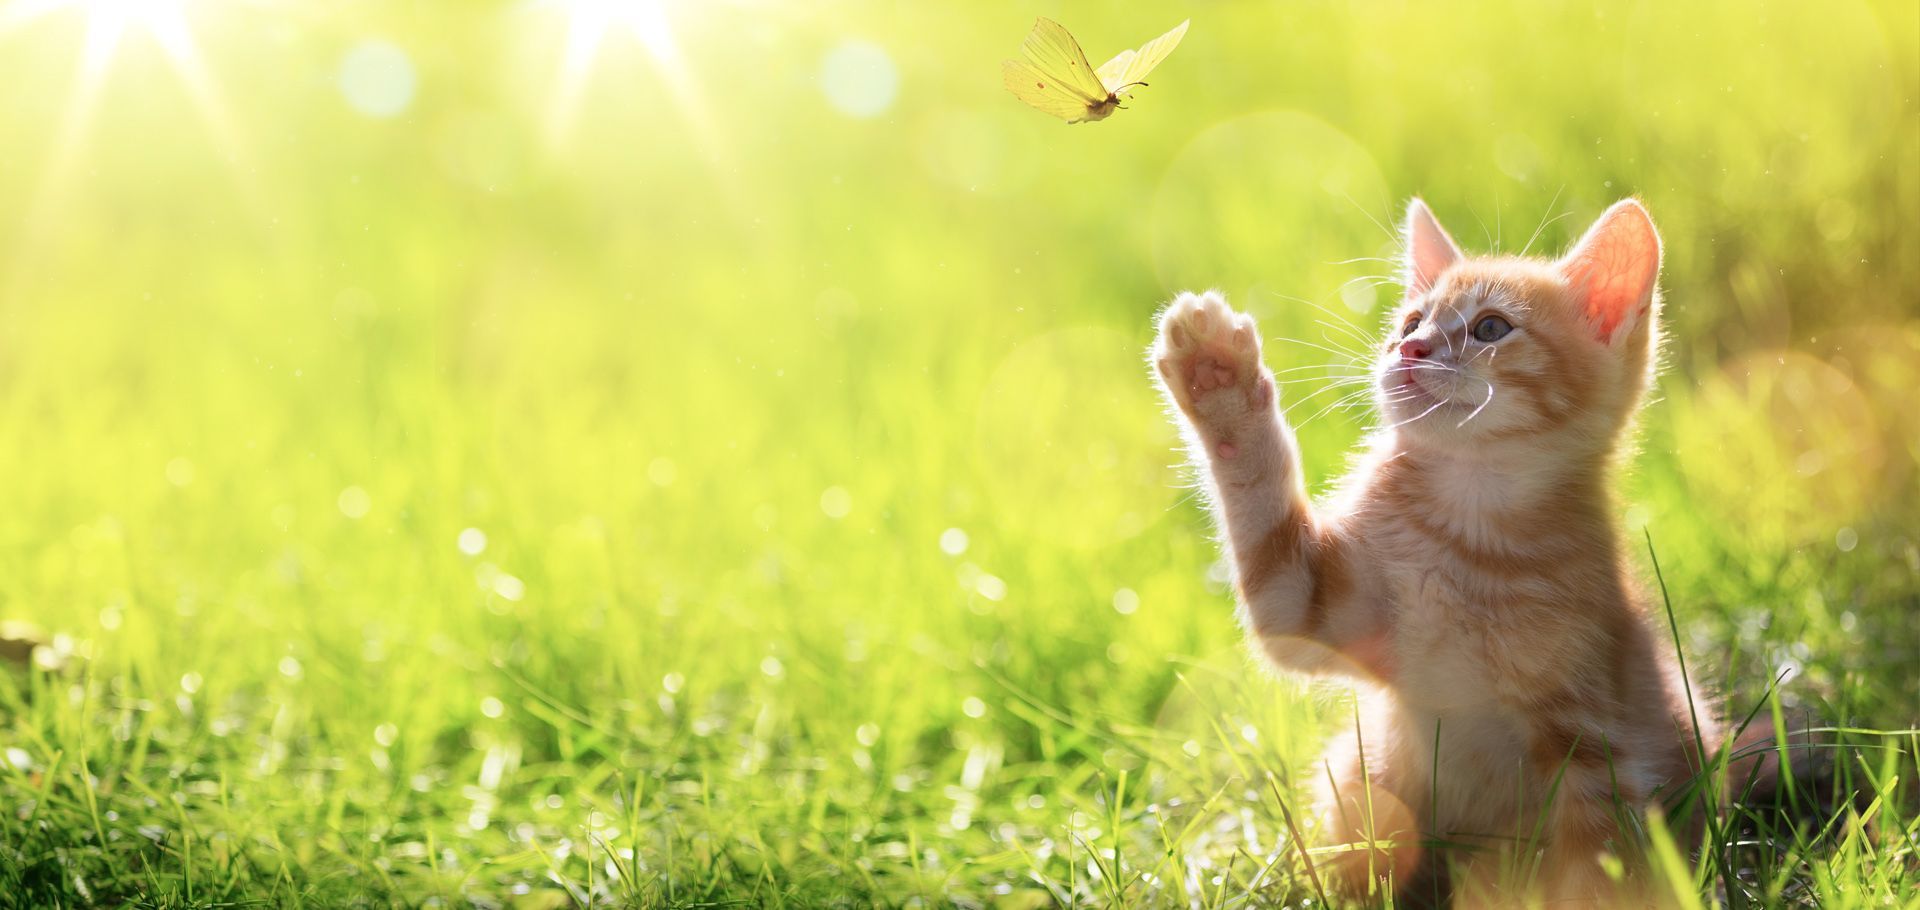 a kitten in a field swatting at a butterfly